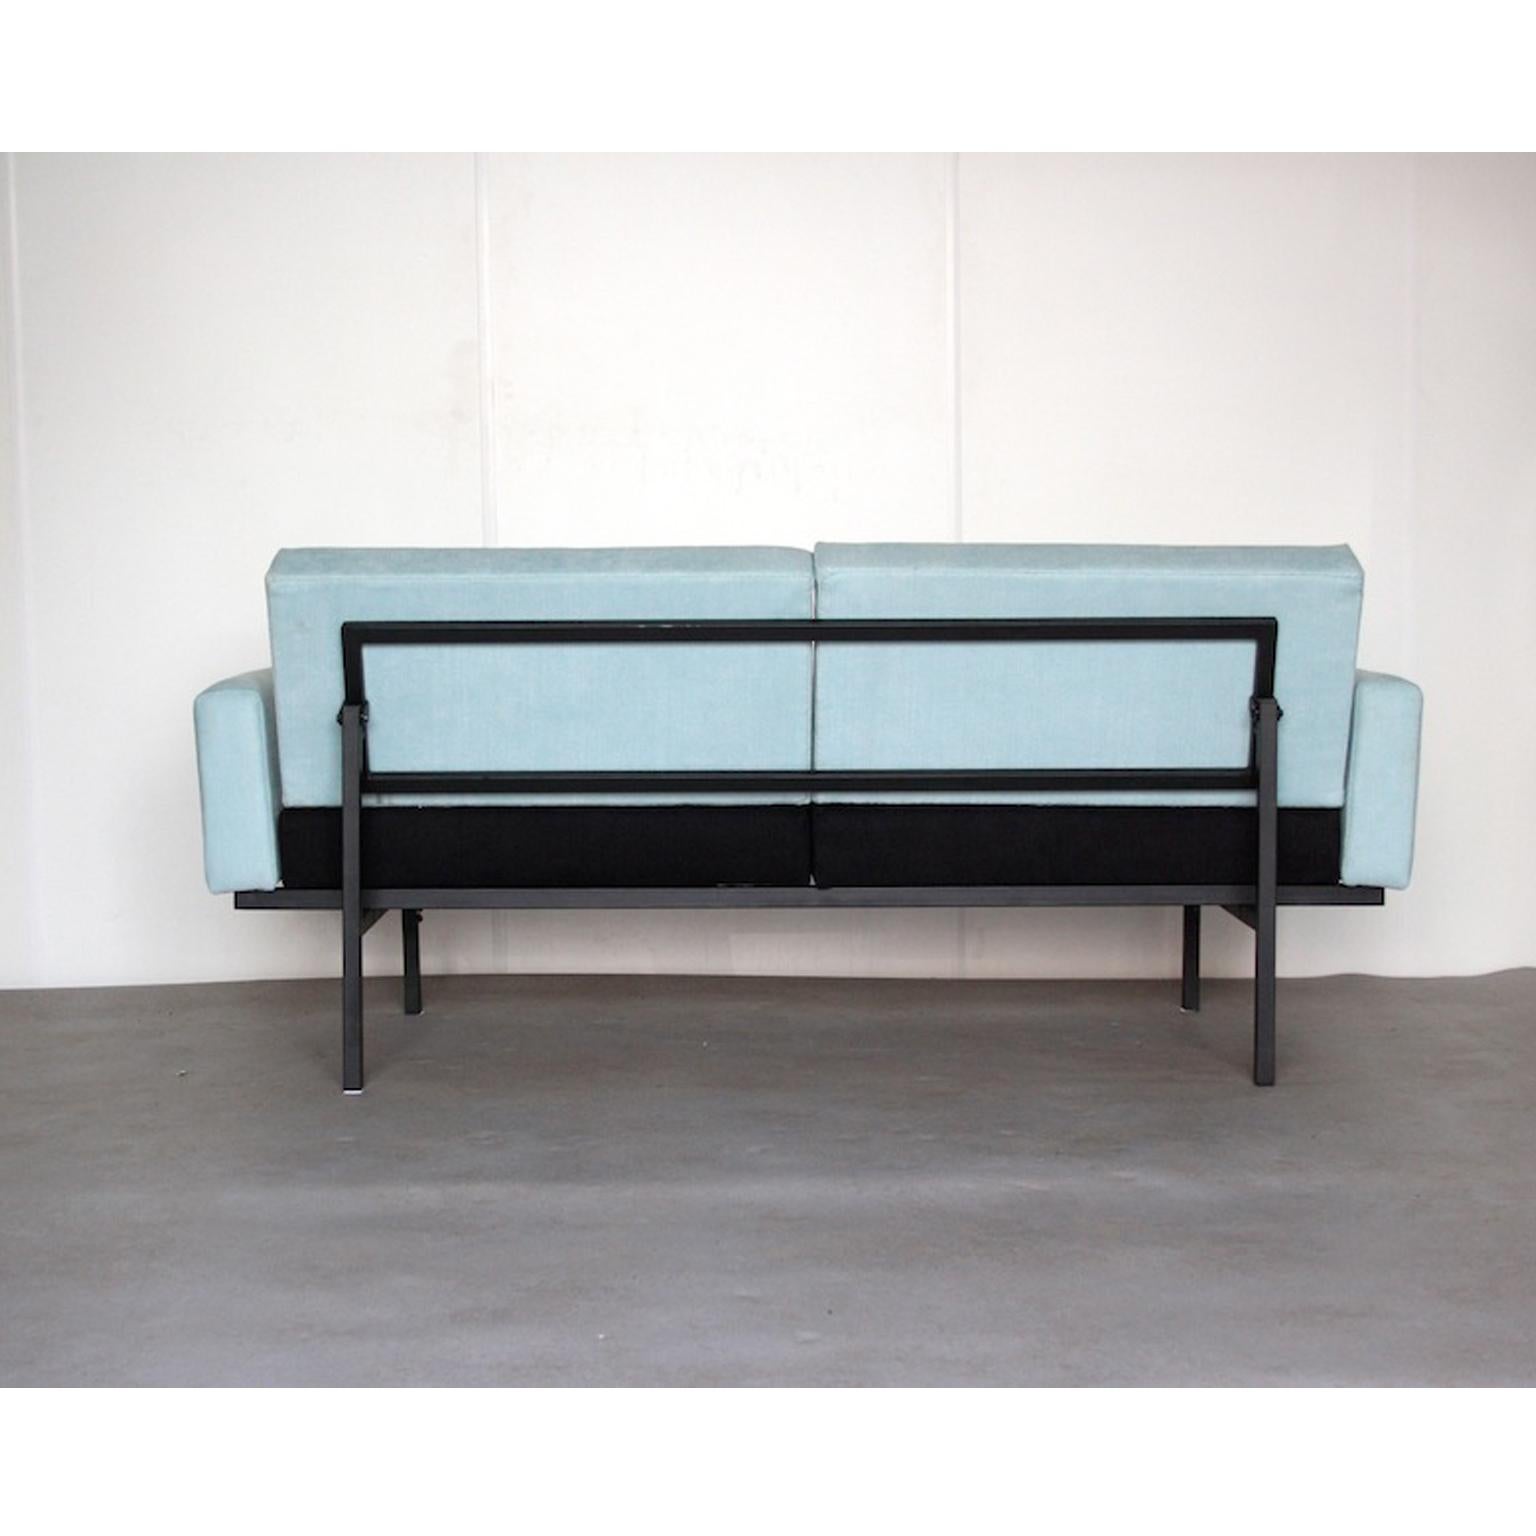 Mid-Century Modern Sofa or Daybed by Coen de Vries for Devo, Dutch Design, 1952